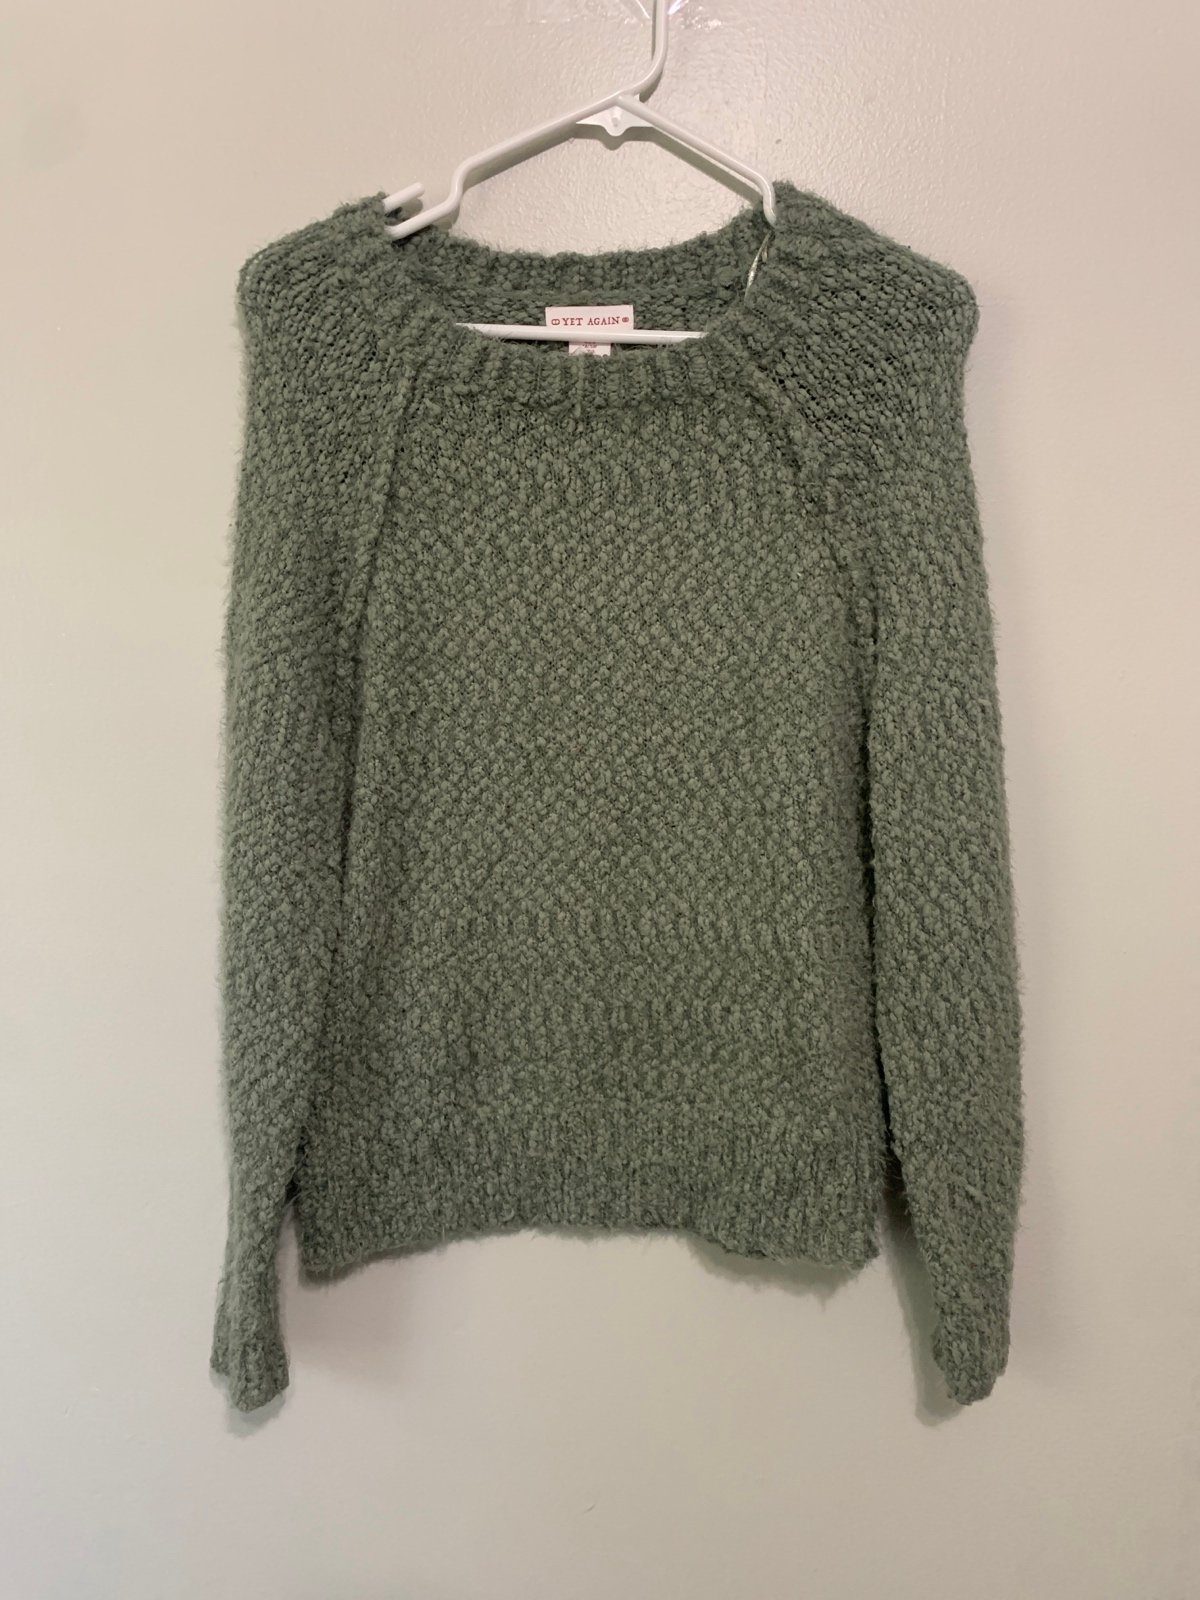 Personality Sweater size small OmwUbuS5V Fashion